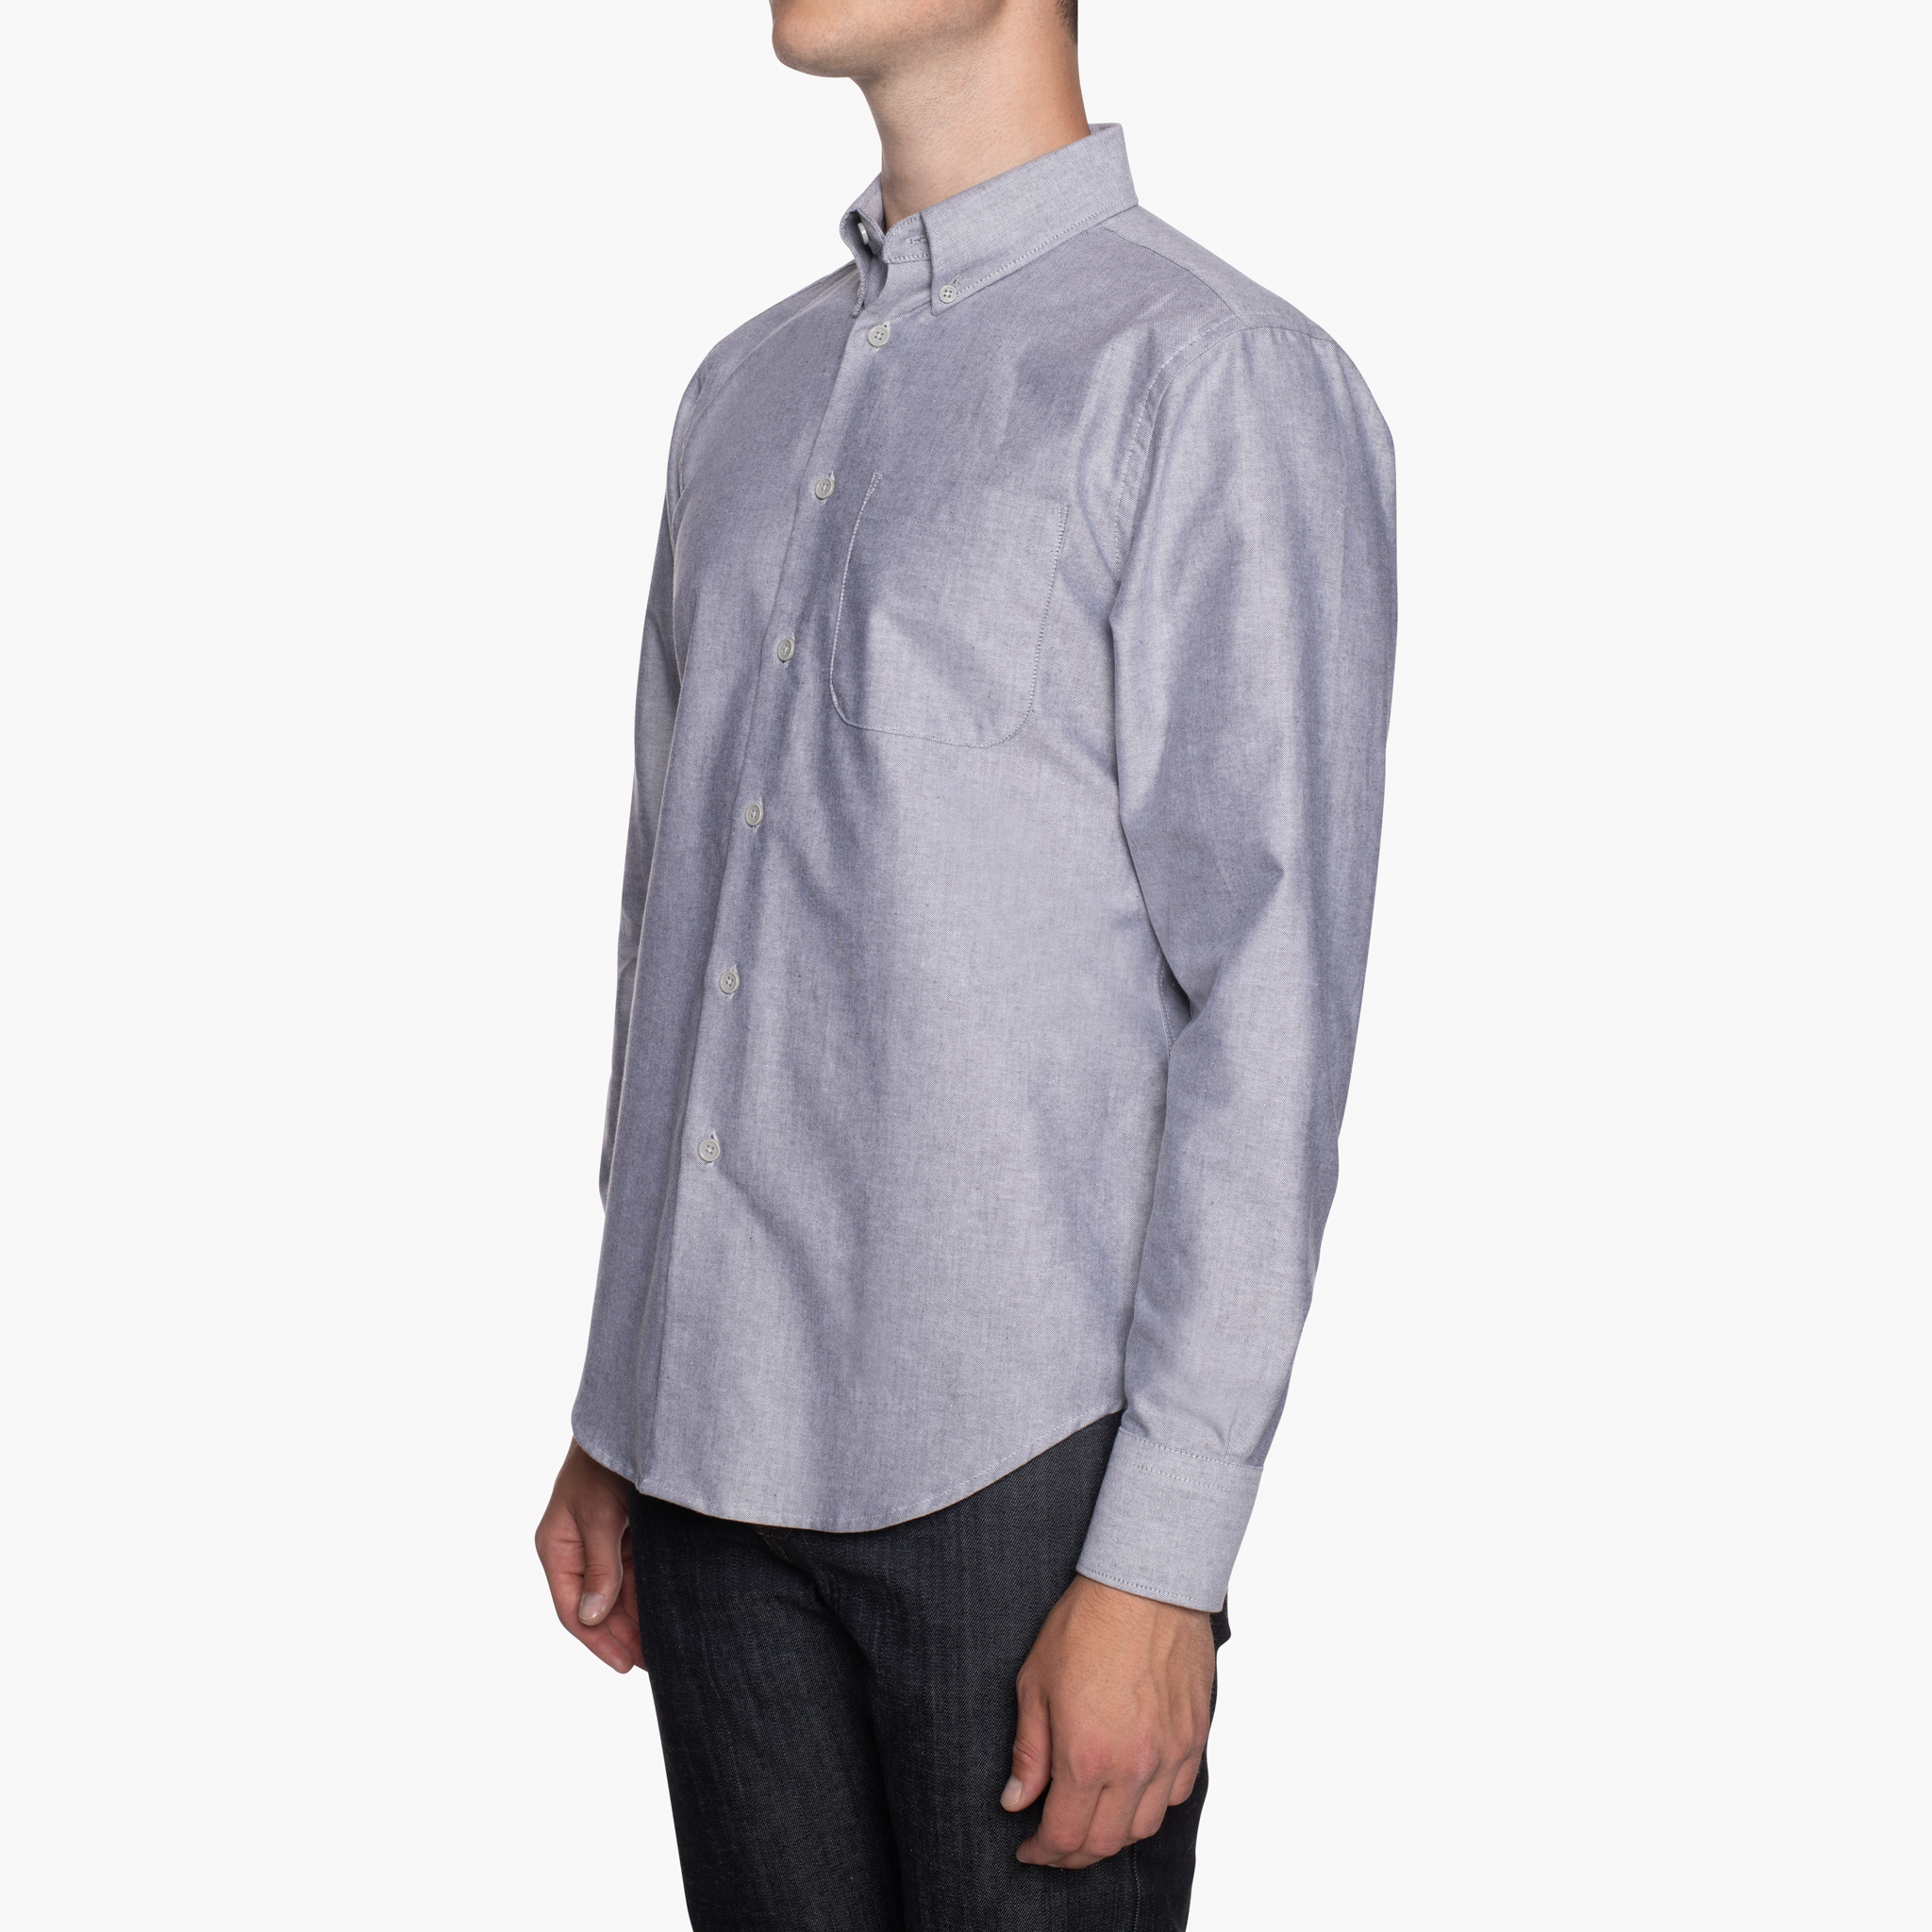  Easy Shirt - Cotton Oxford - black - side 